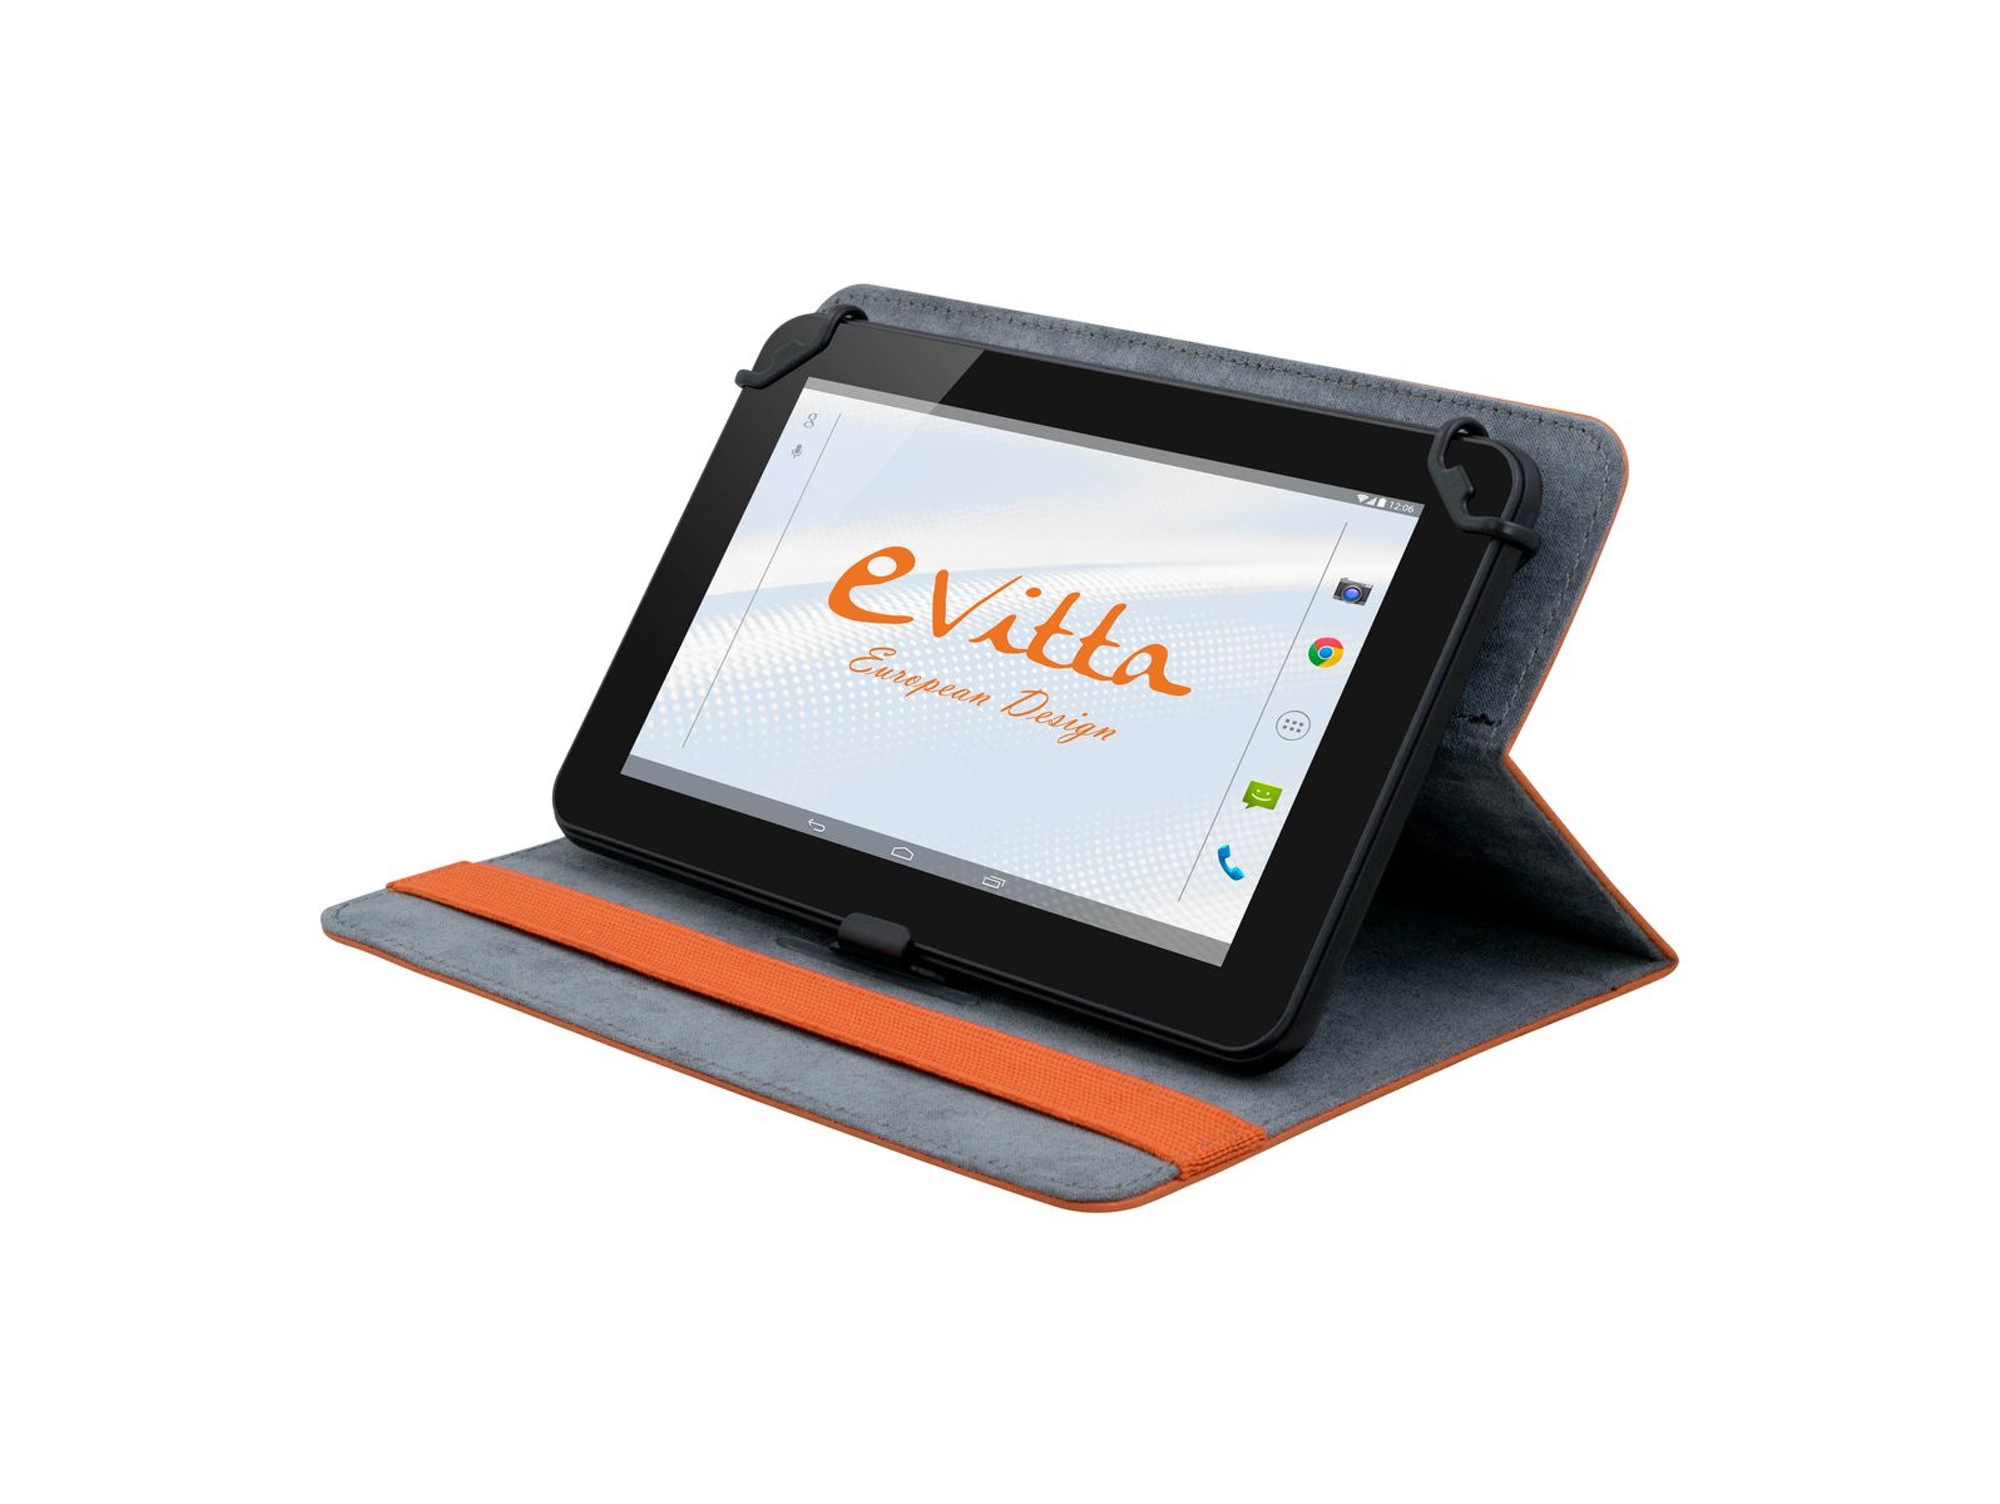 Funda Universal Evitta stand 2p orange para tablet 9.710.124.625.6 naranja tablets 9.7 10.1 9.710.1 evun000363